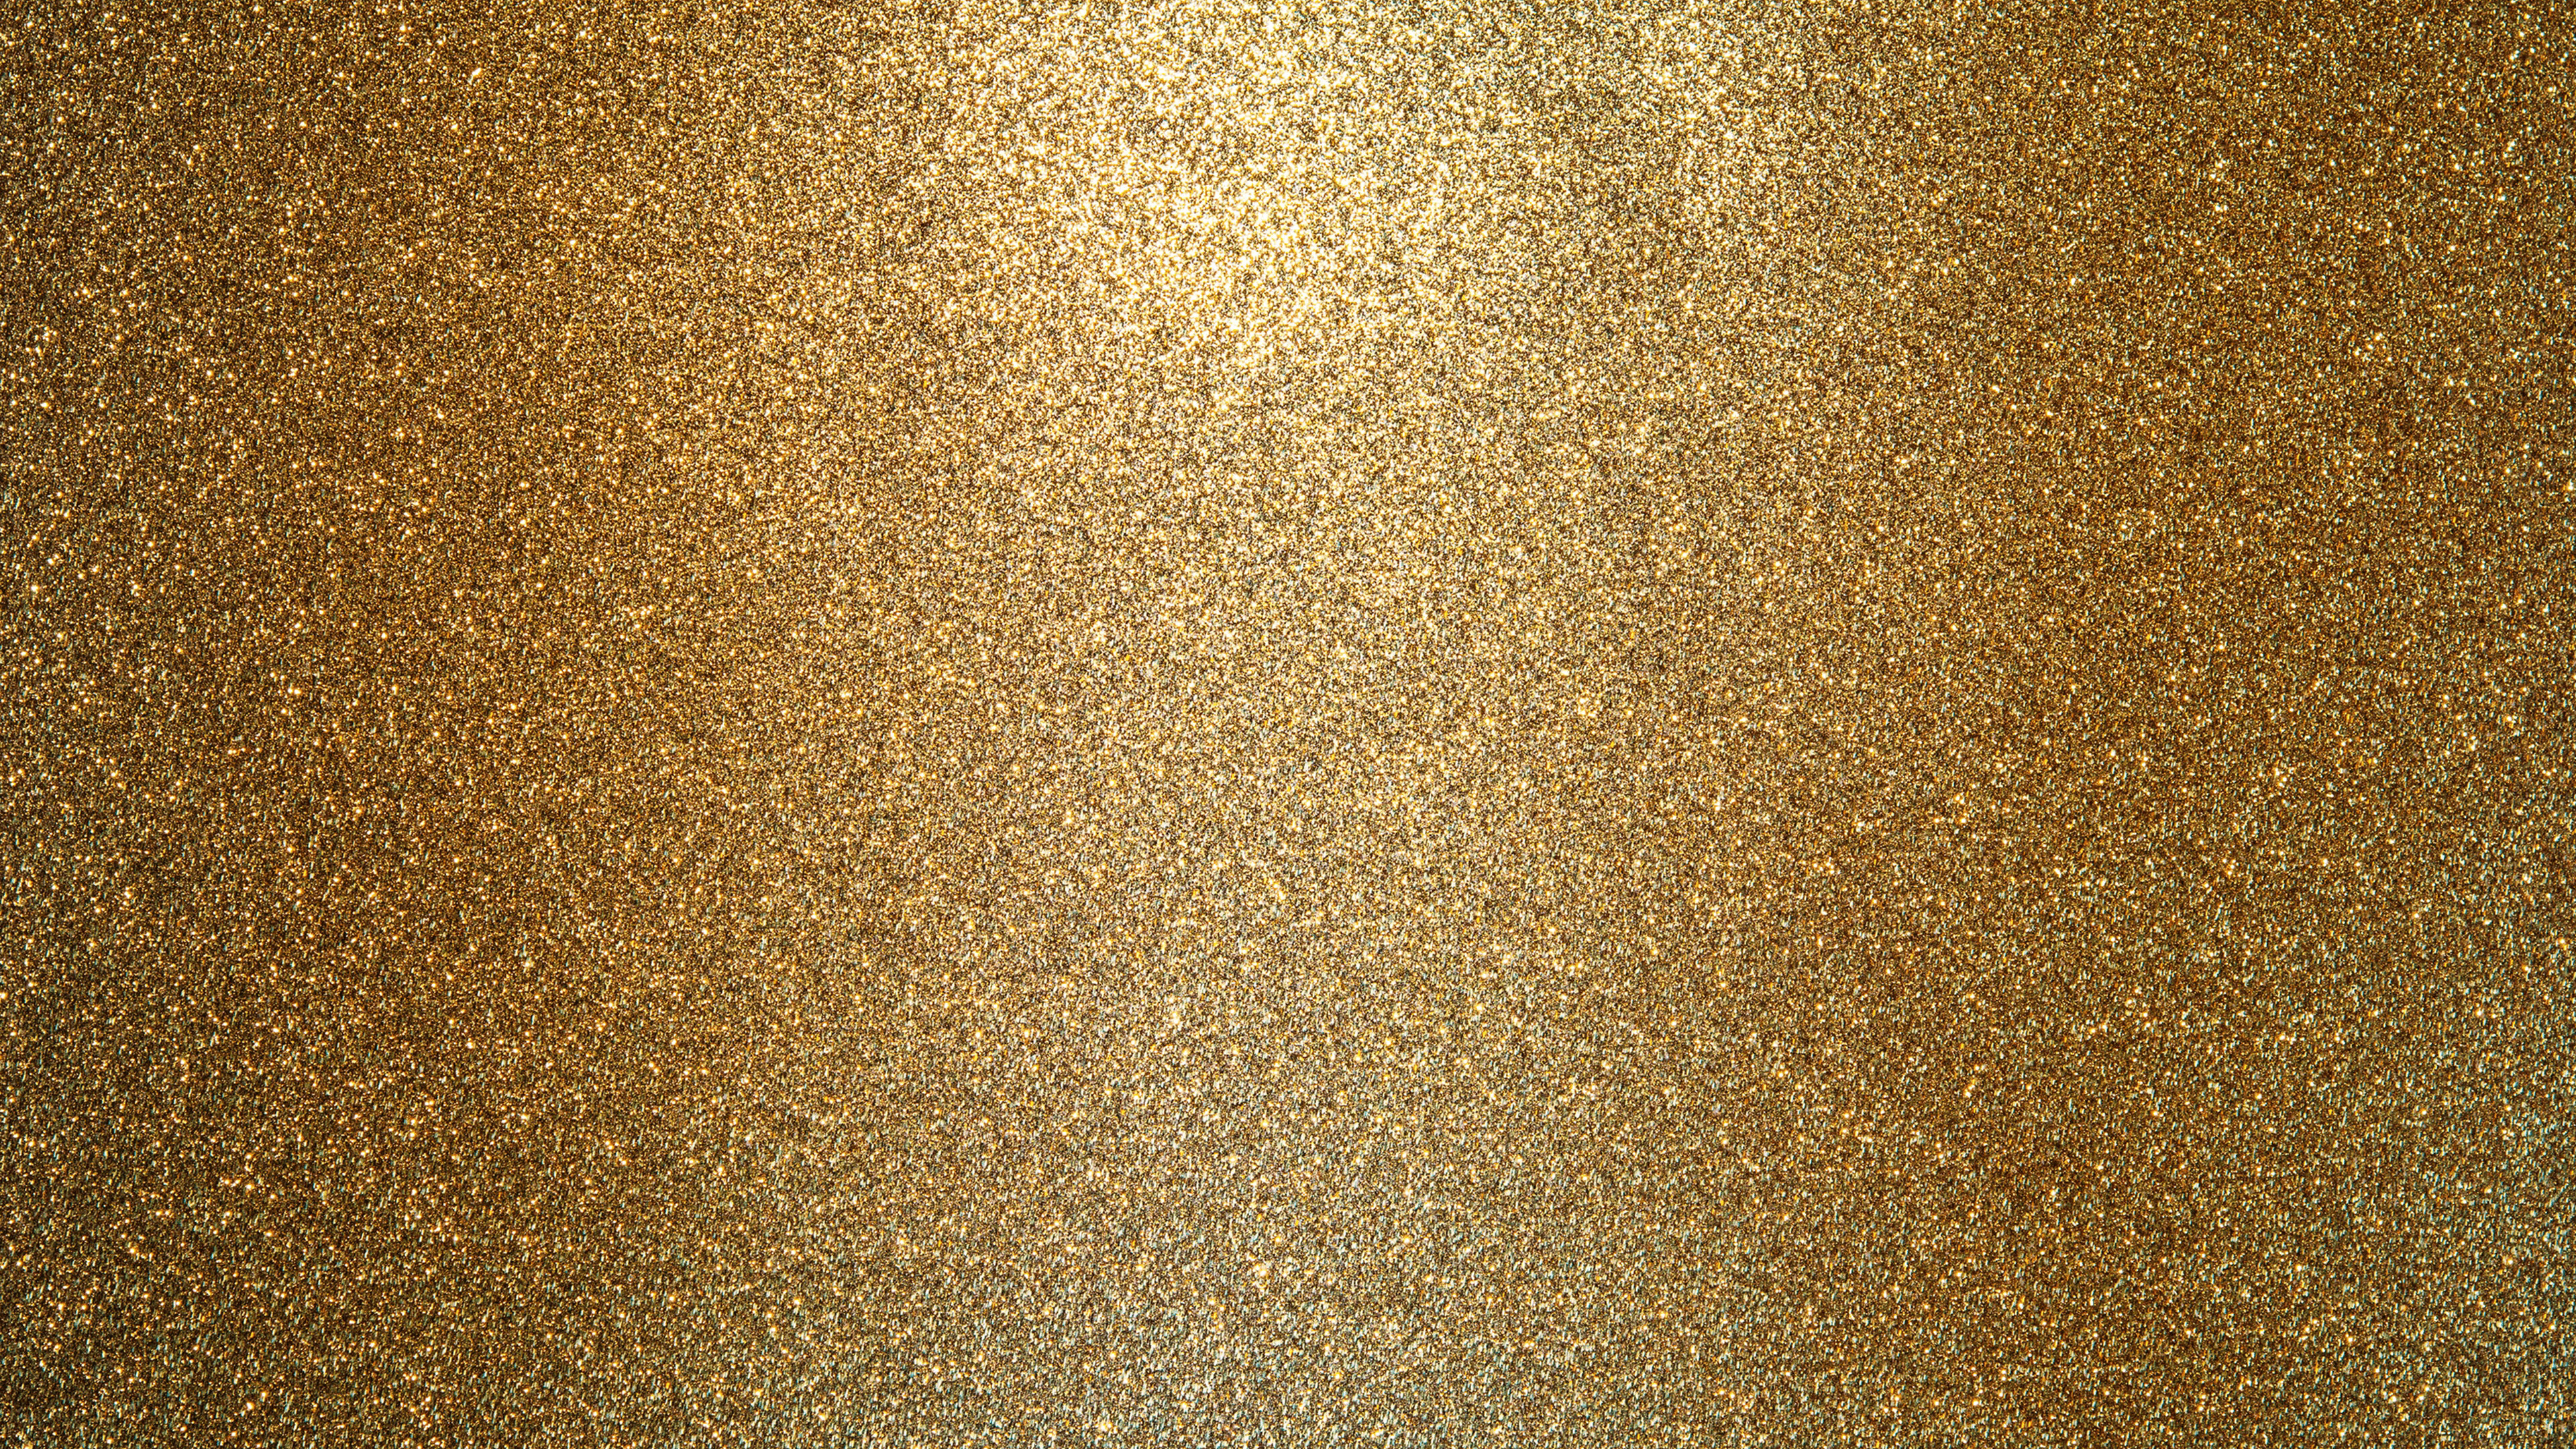 Gold Glitter: The silver-gilt golden surface, A distinctive depletion gilding technique. 3840x2160 4K Wallpaper.